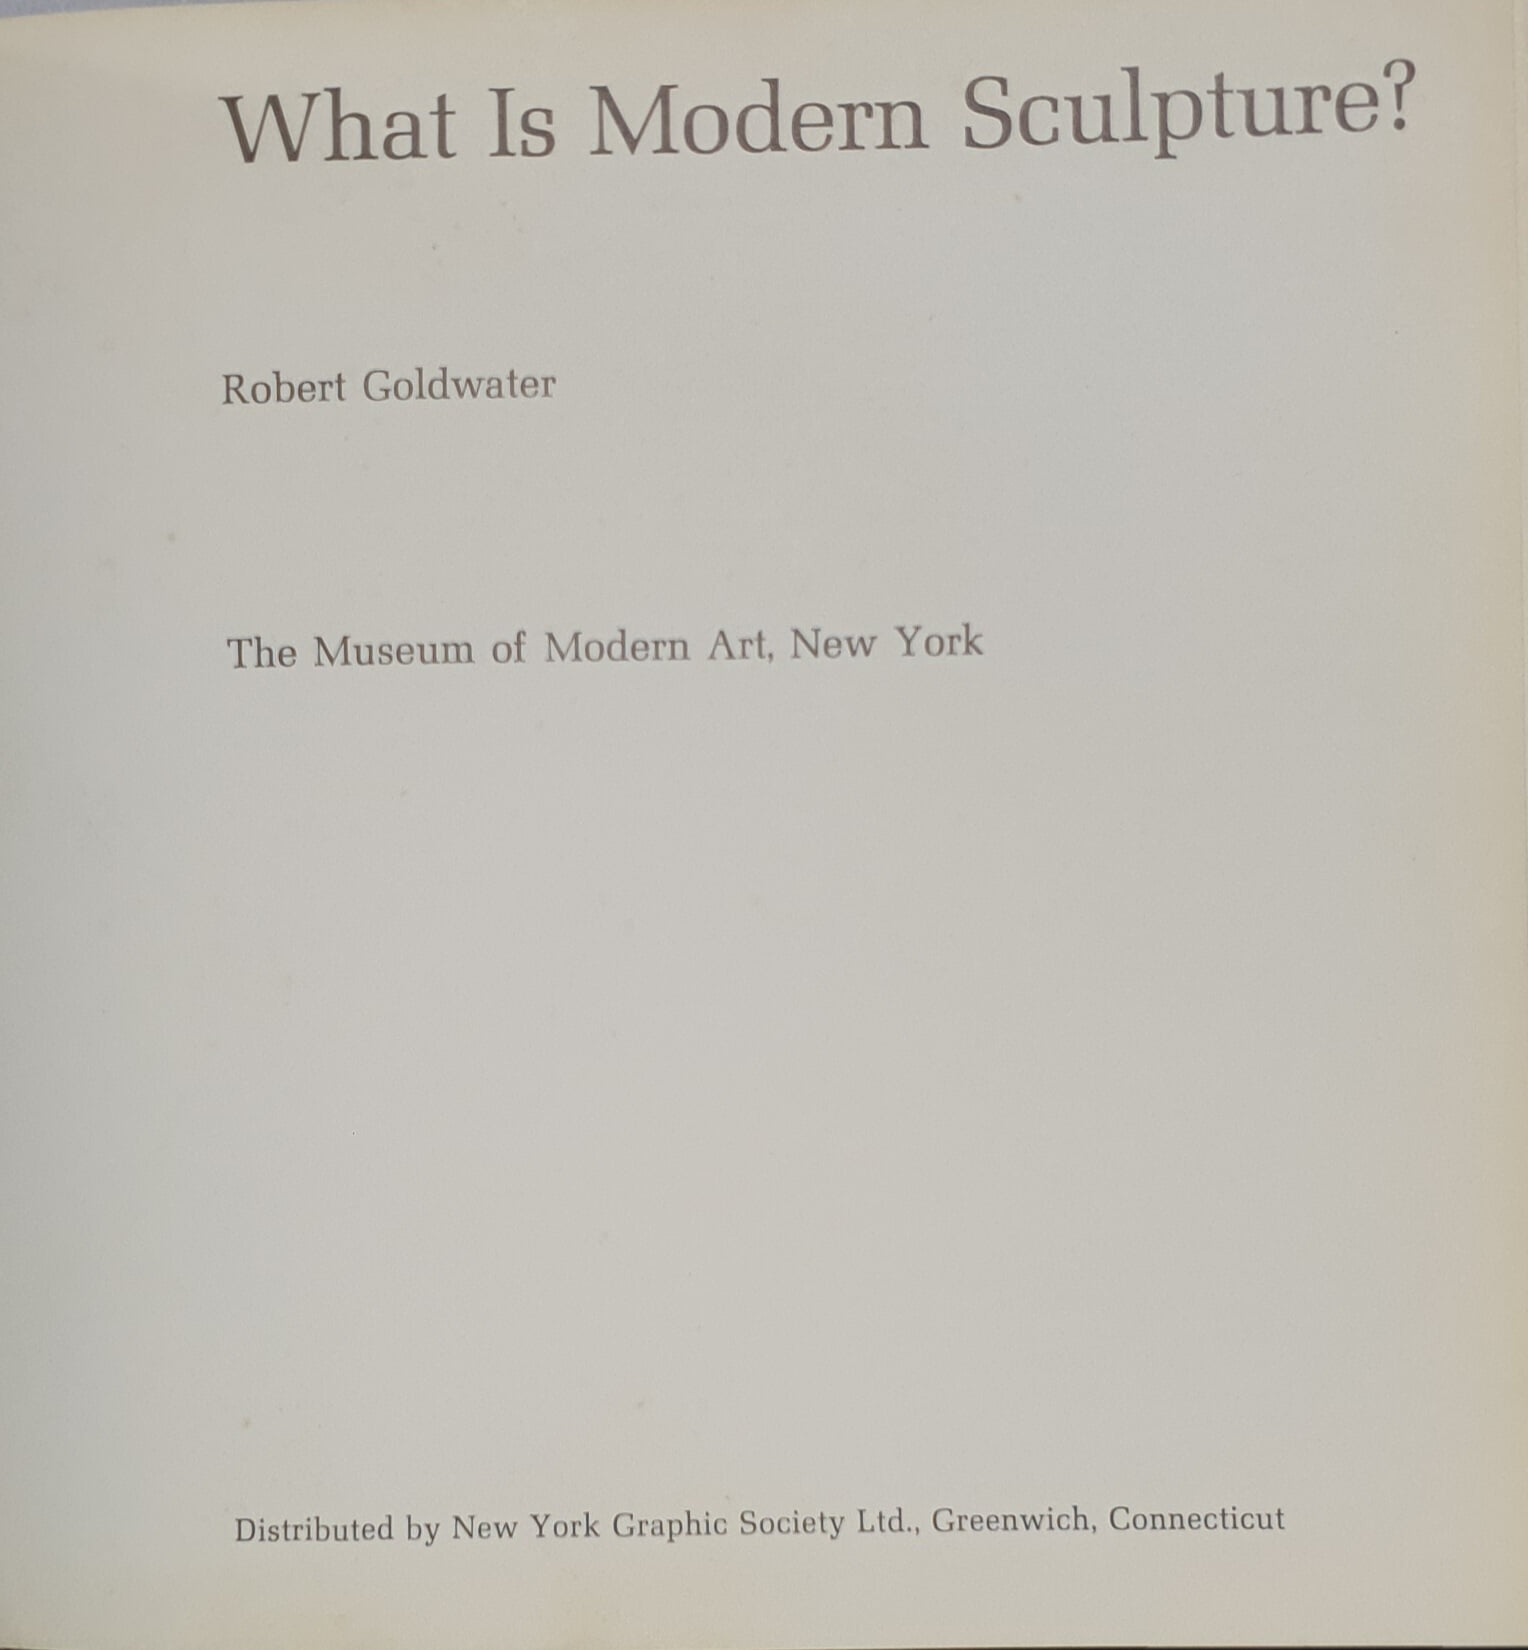 What Is Modern Sculpture? (The Museum of Modern Art, New York)